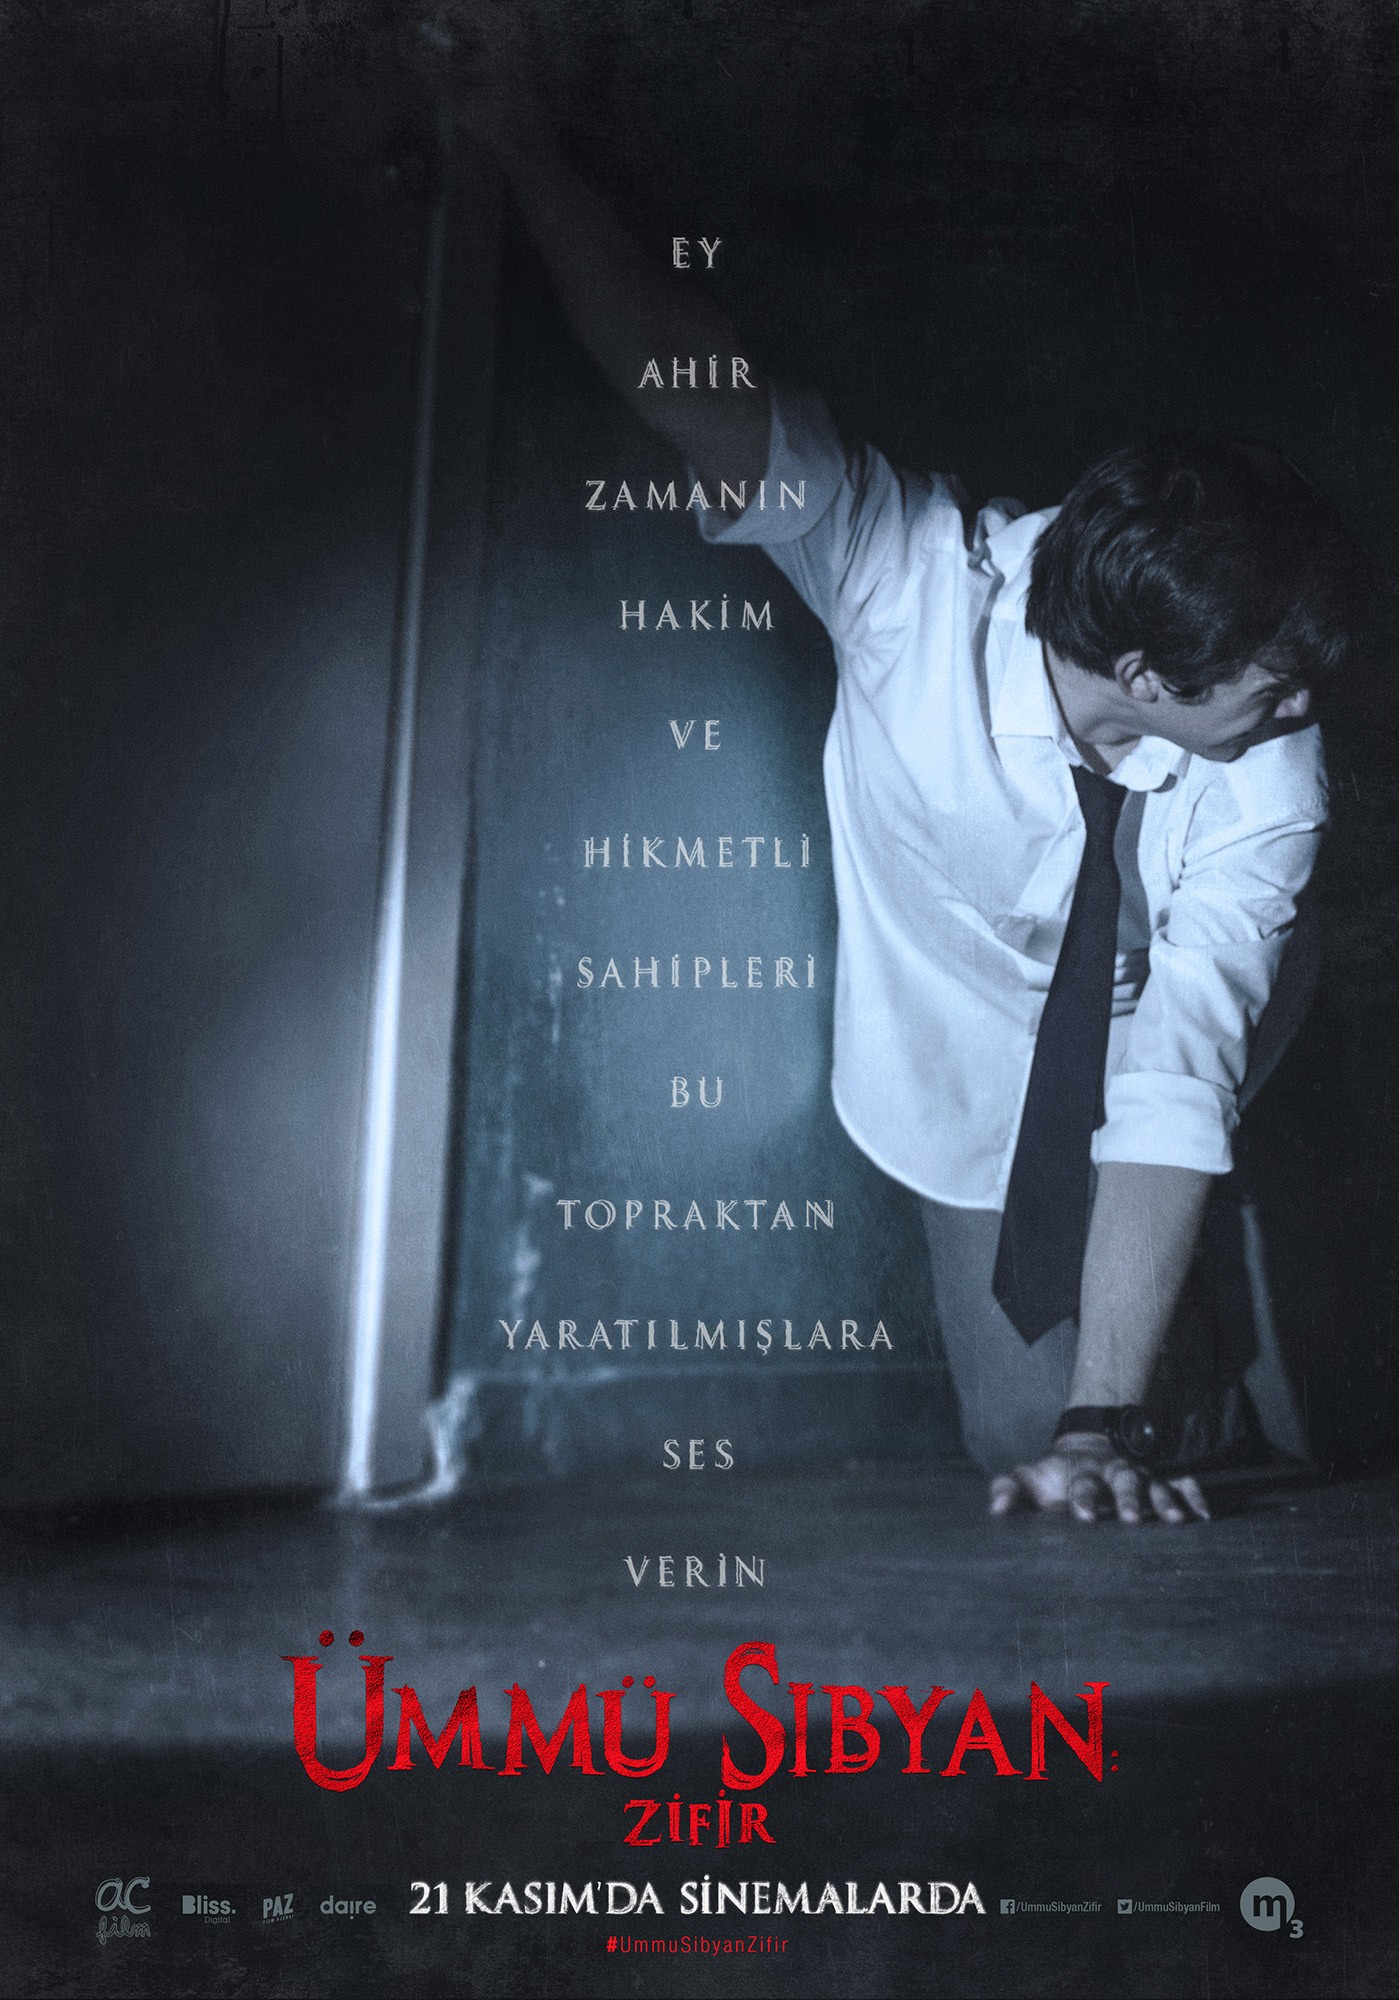 Mega Sized Movie Poster Image for Ümmü Sıbyan Zifir (#9 of 12)